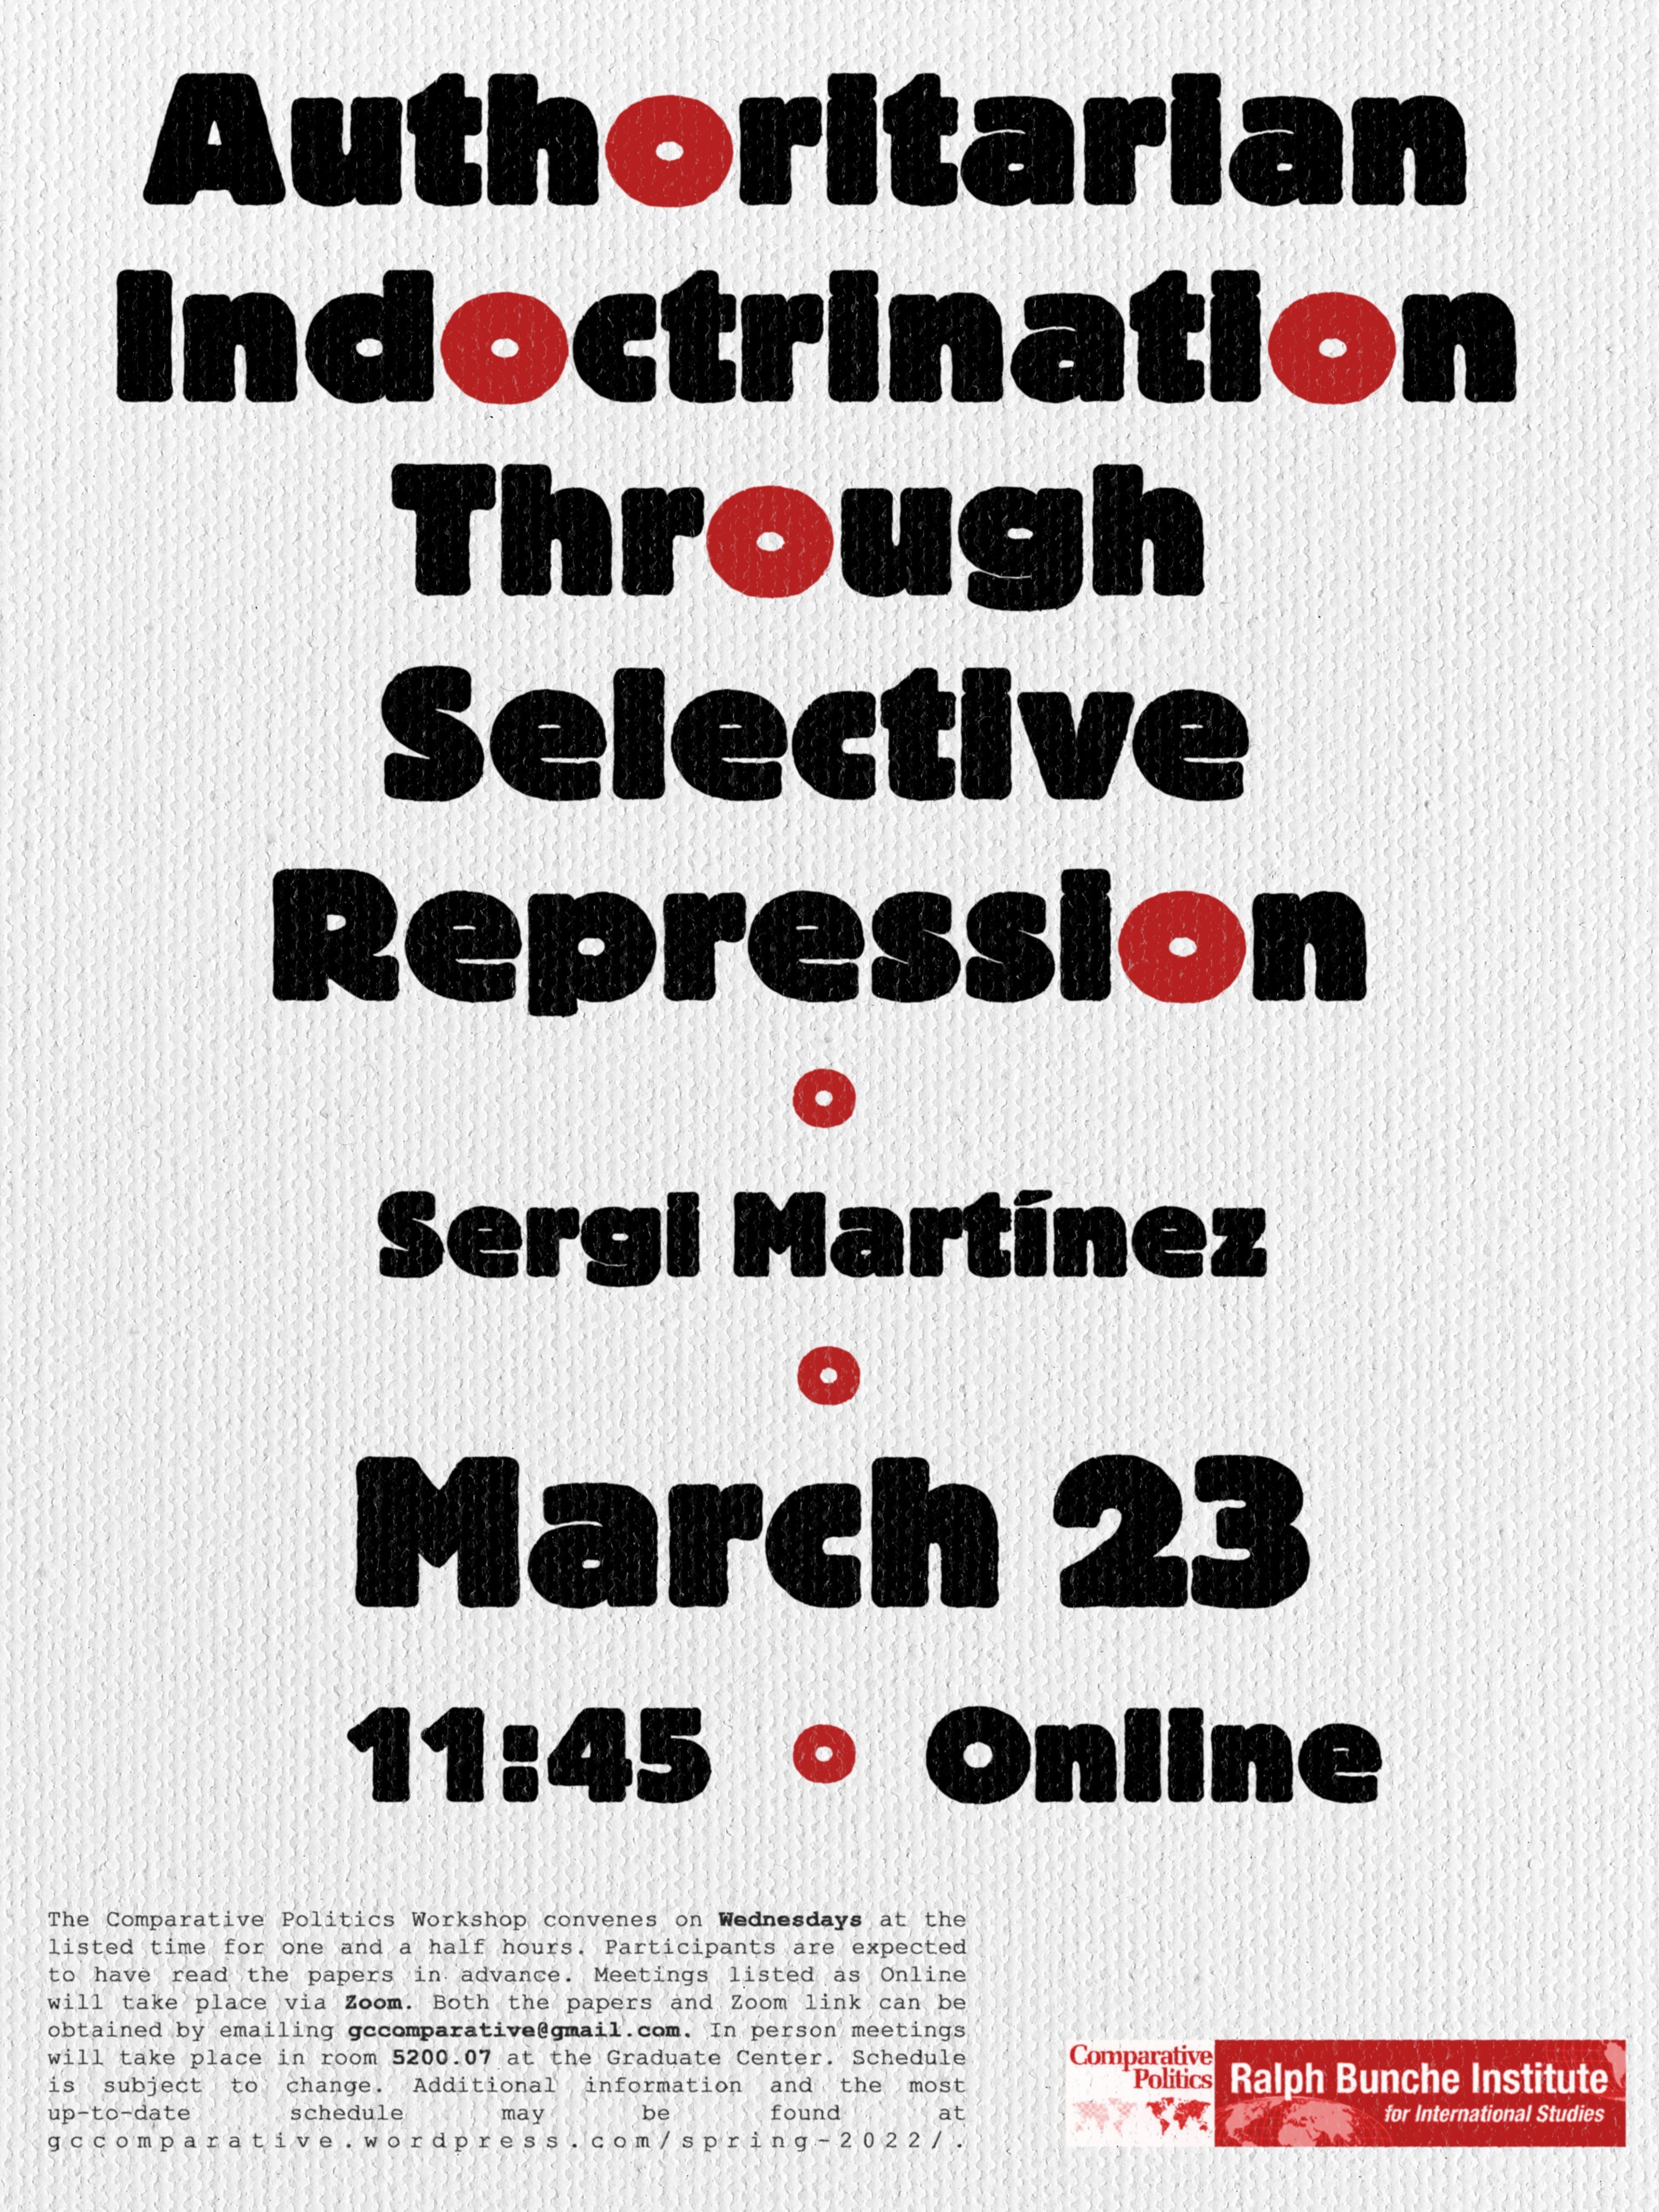 Comparative Politics Workshop: Sergi Martínez, "Authoritarian Indoctrination Through Selective Repression," Wednesday, March 23, 11:45 AM EST